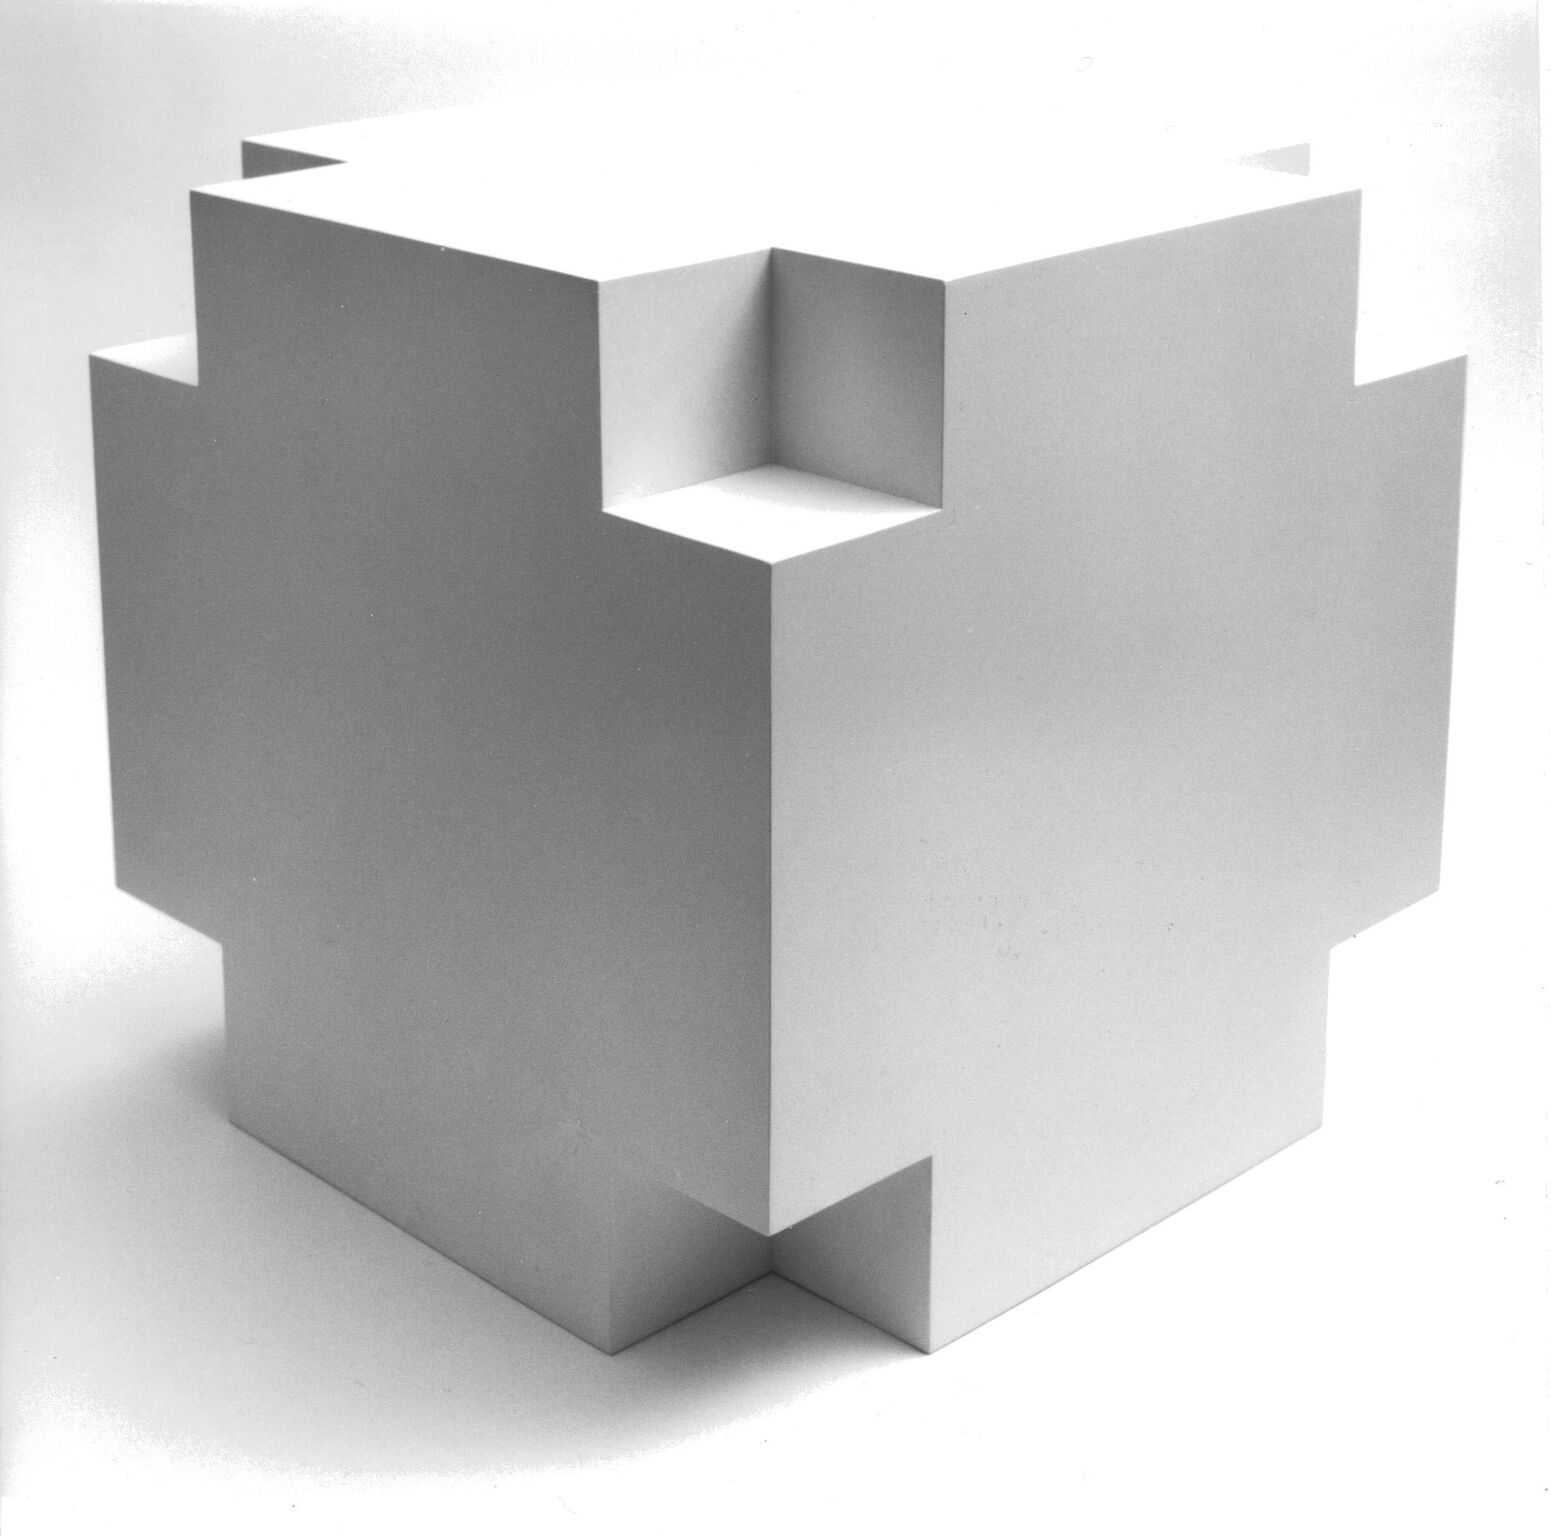  Ewerdt Hilgemann  Cube Structure 134 #720134 , 1972 wood, painted white 23 5/8 x 23 5/8 x 23 5/8 in &nbsp;(60 x 60 x 60 cm) 